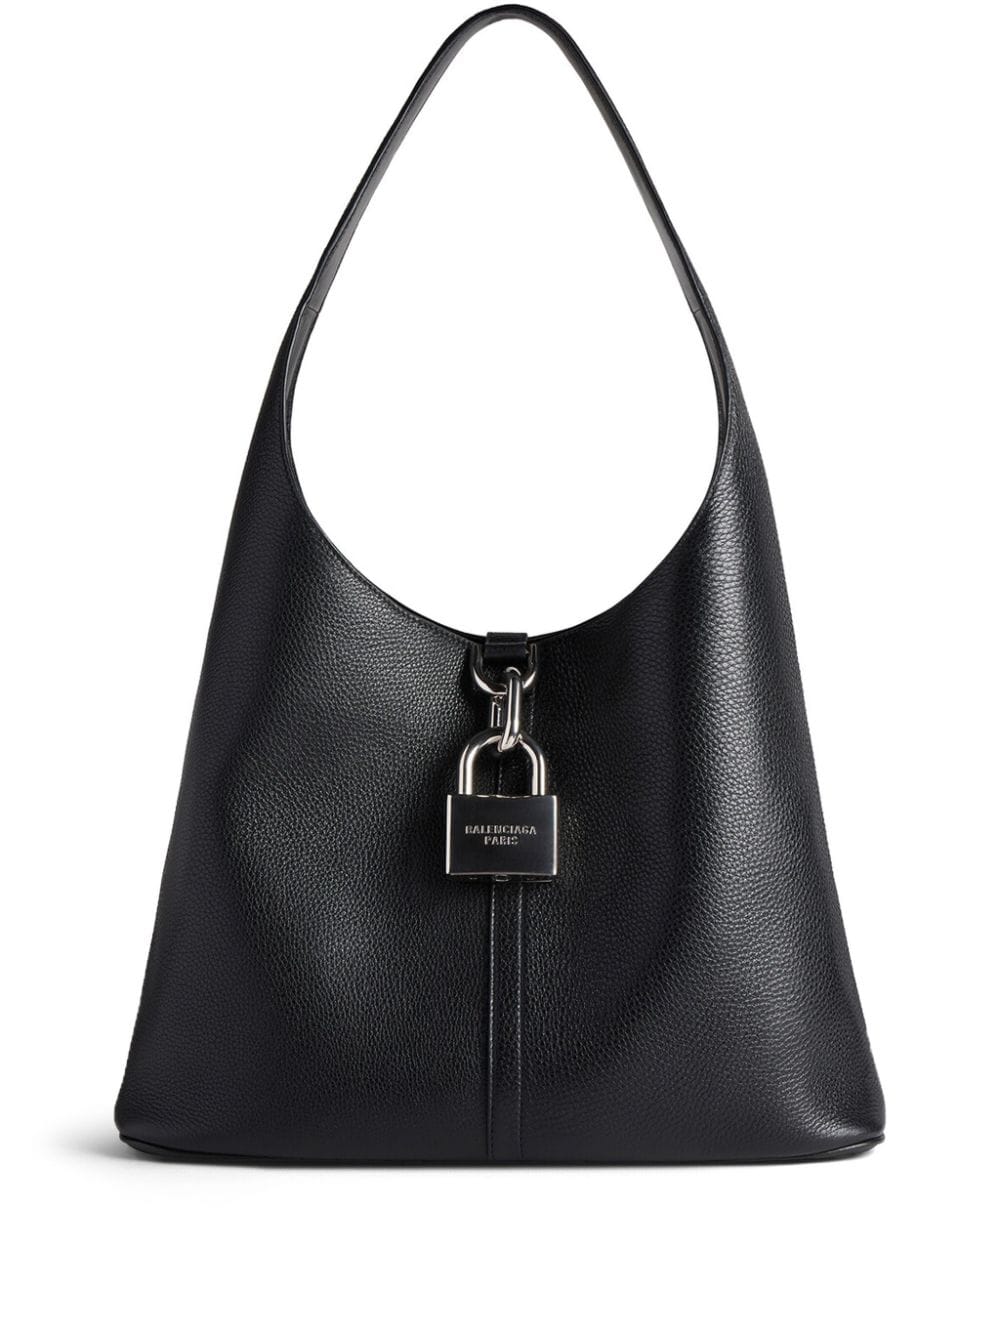 Black Grained Leather Tote Handbag for Women